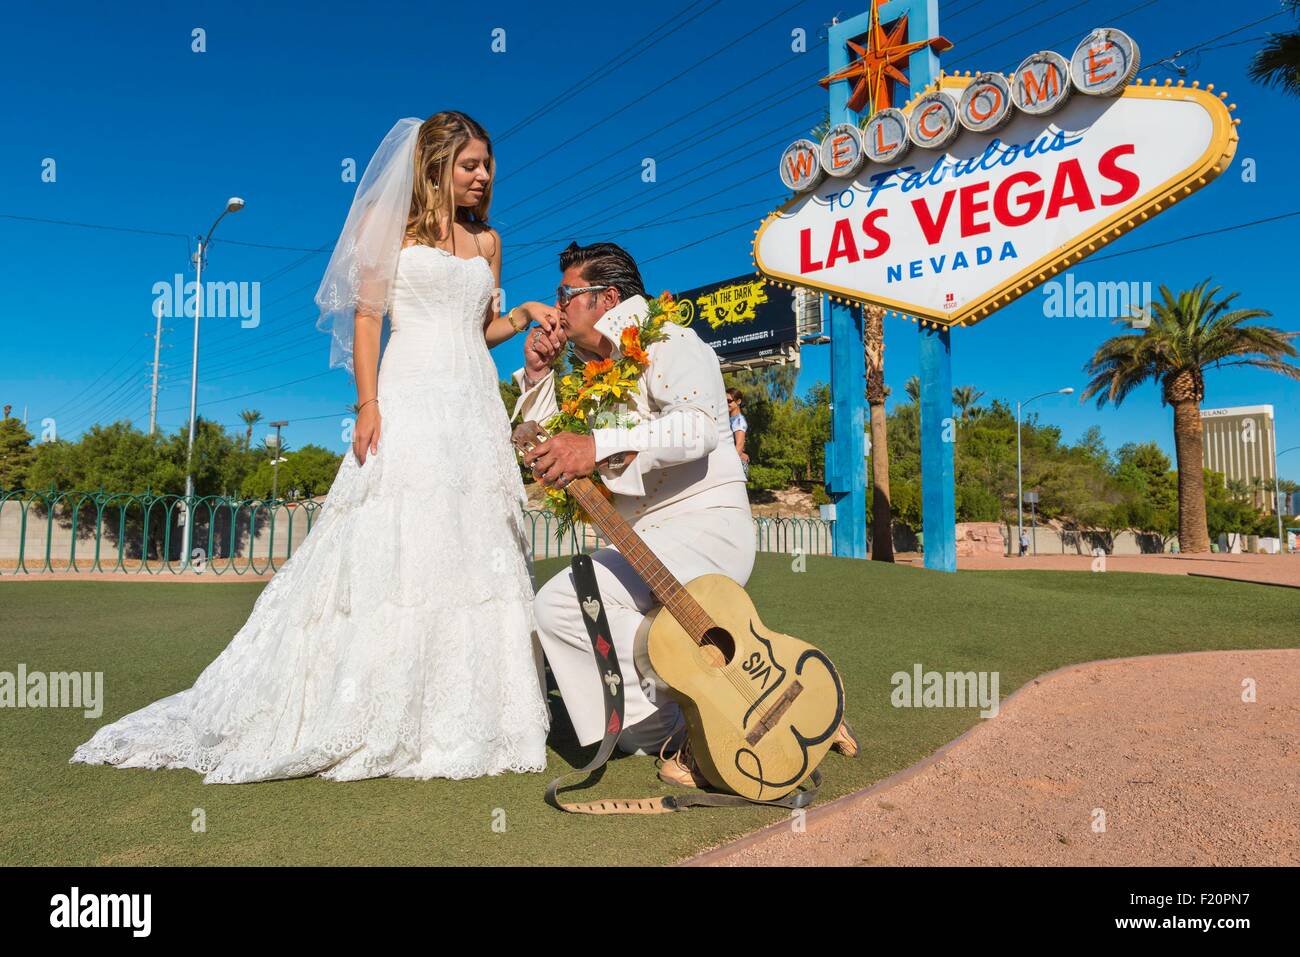 Stati Uniti, Nevada, la striscia di Las Vegas segno su Las Vegas Boulevard, appena sposata con Elvis Presley Foto Stock